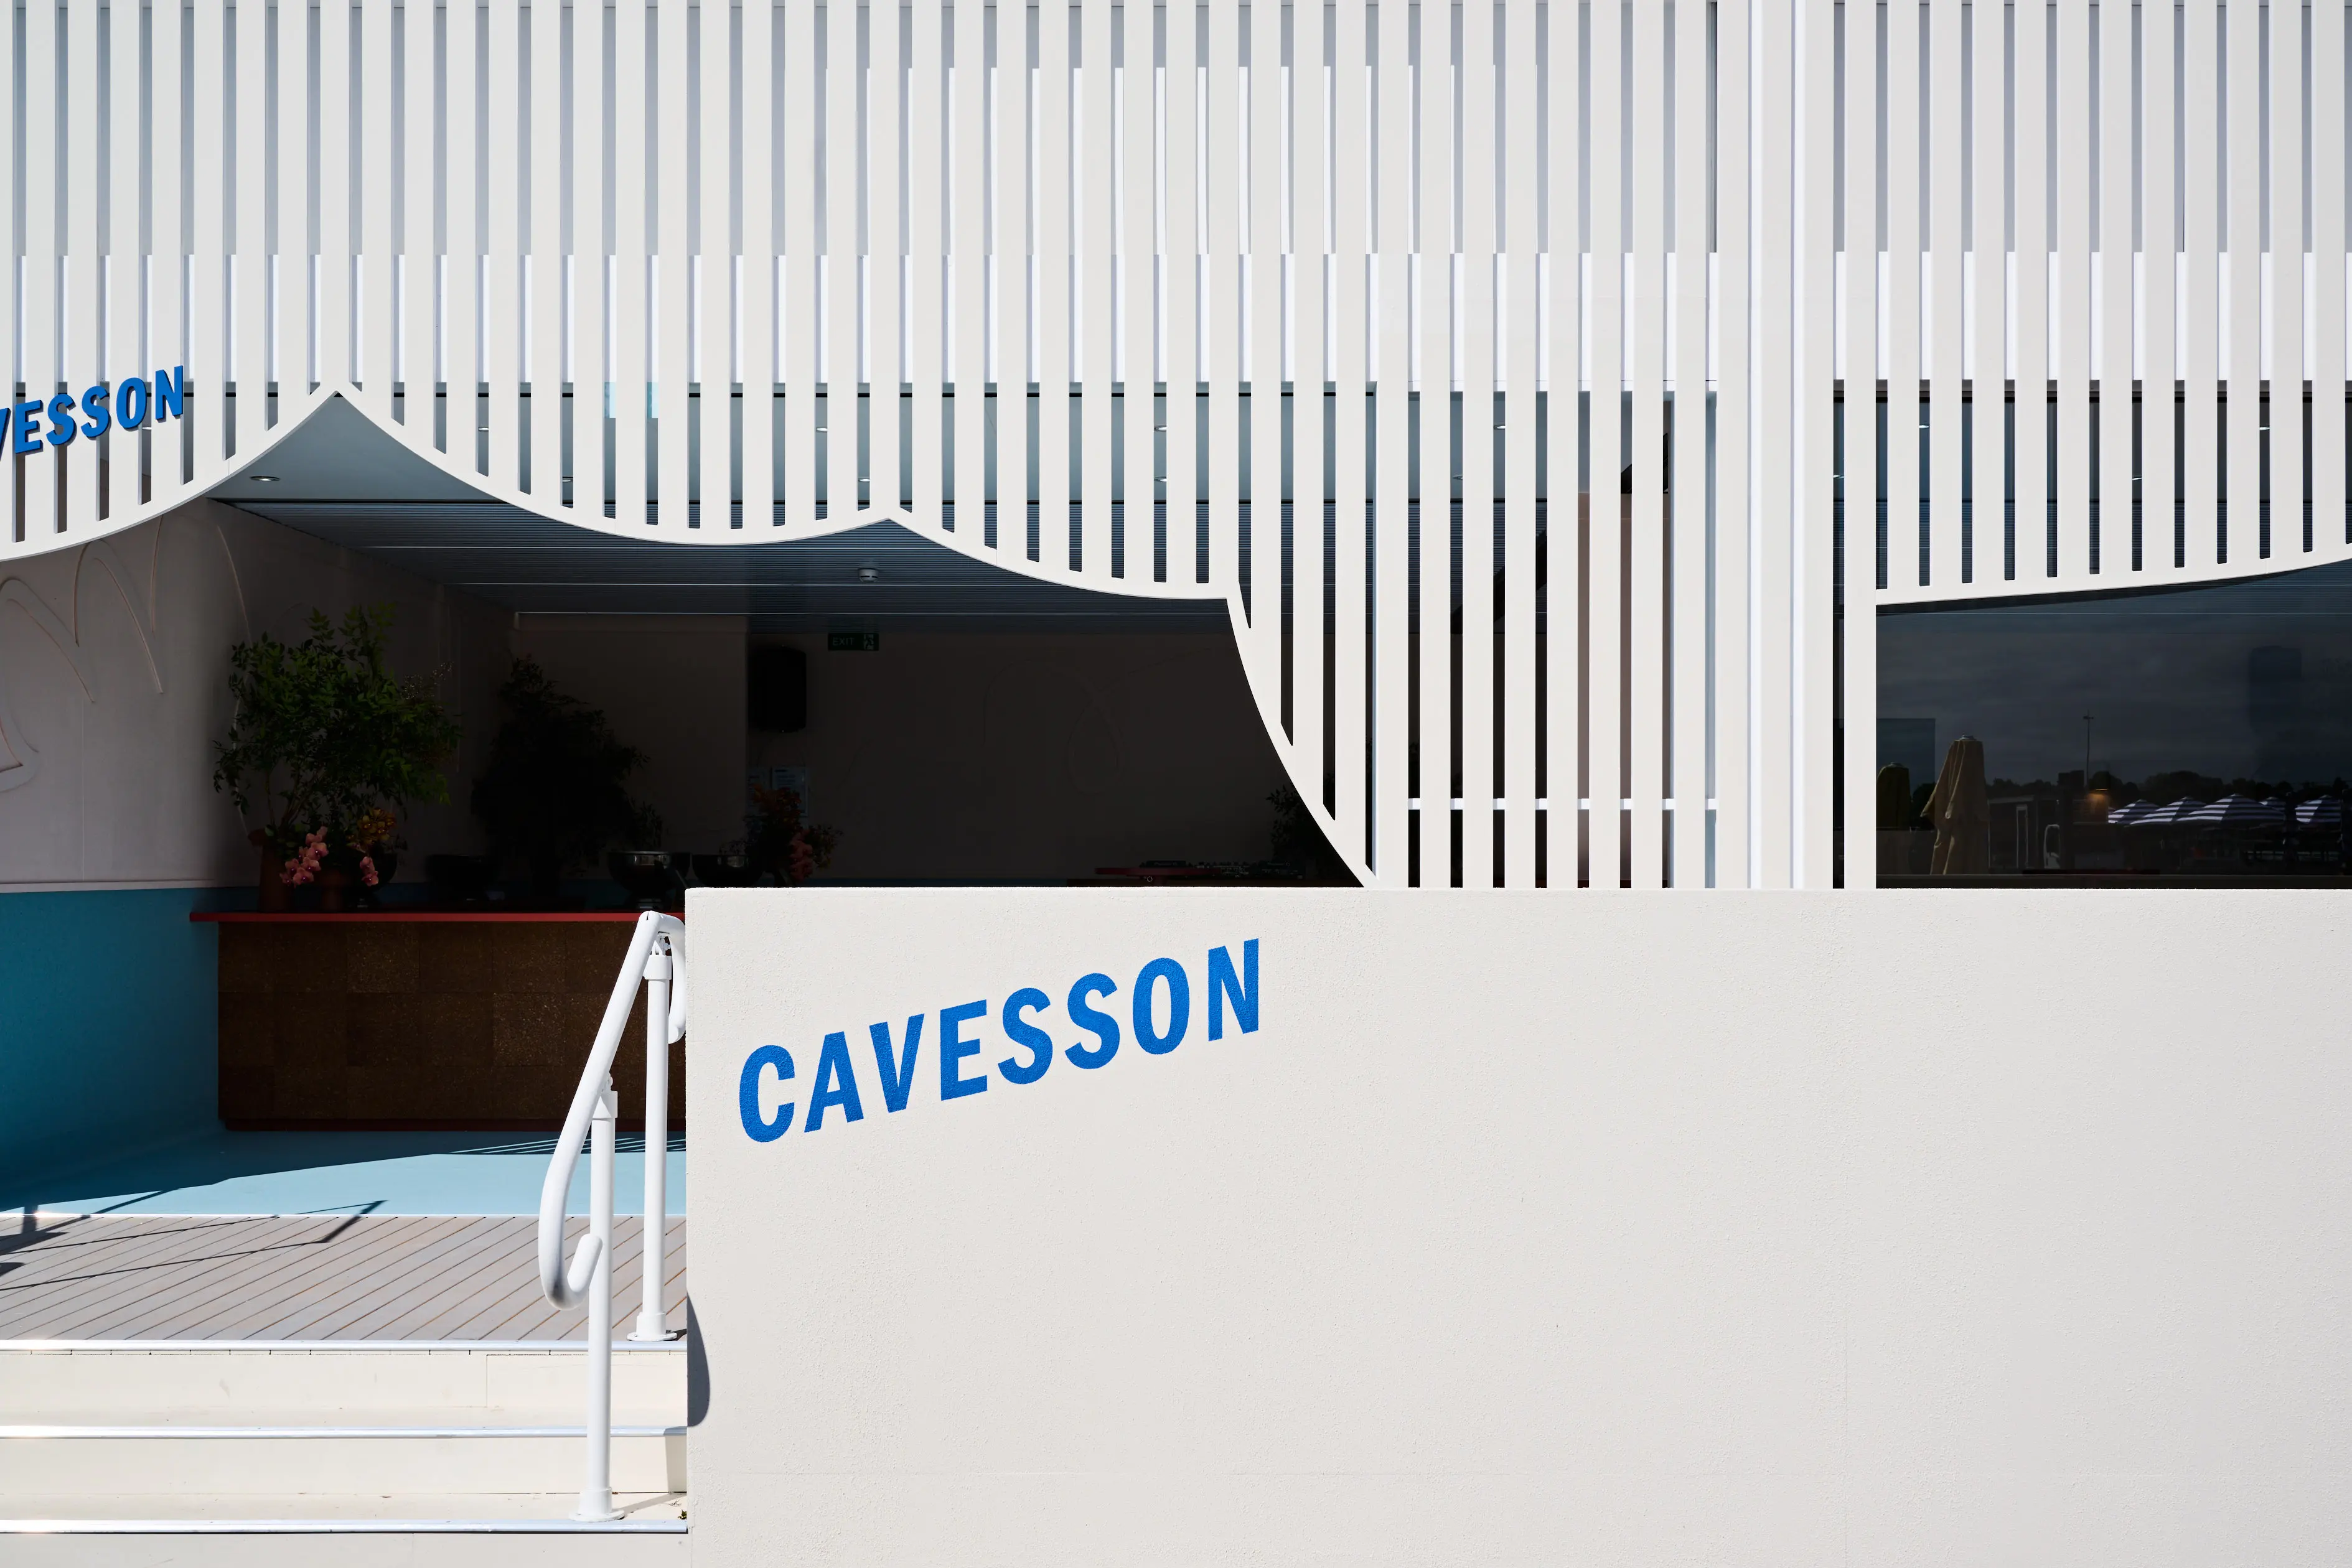 Cavesson for Flemington Birdcage - event and activation, hospitality interior design - Flemington Racecourse, Melbourne, Australia